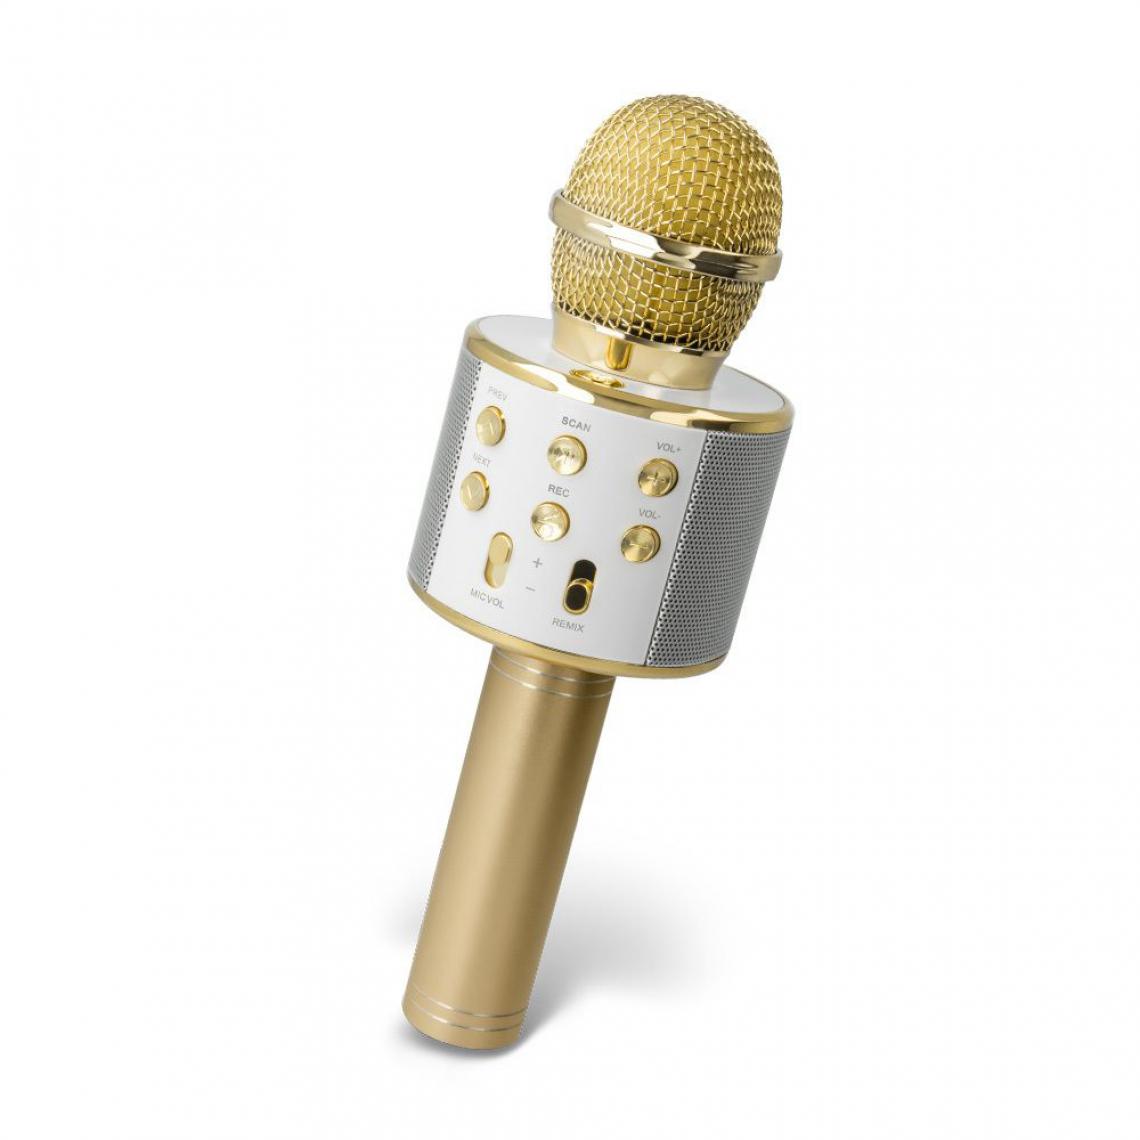 Ozzzo - Microphone Karaoke bluetooth haut parleur ozzzo Gold Or pour Acer Iconia Tab 10 B3-A30 - Autres accessoires smartphone